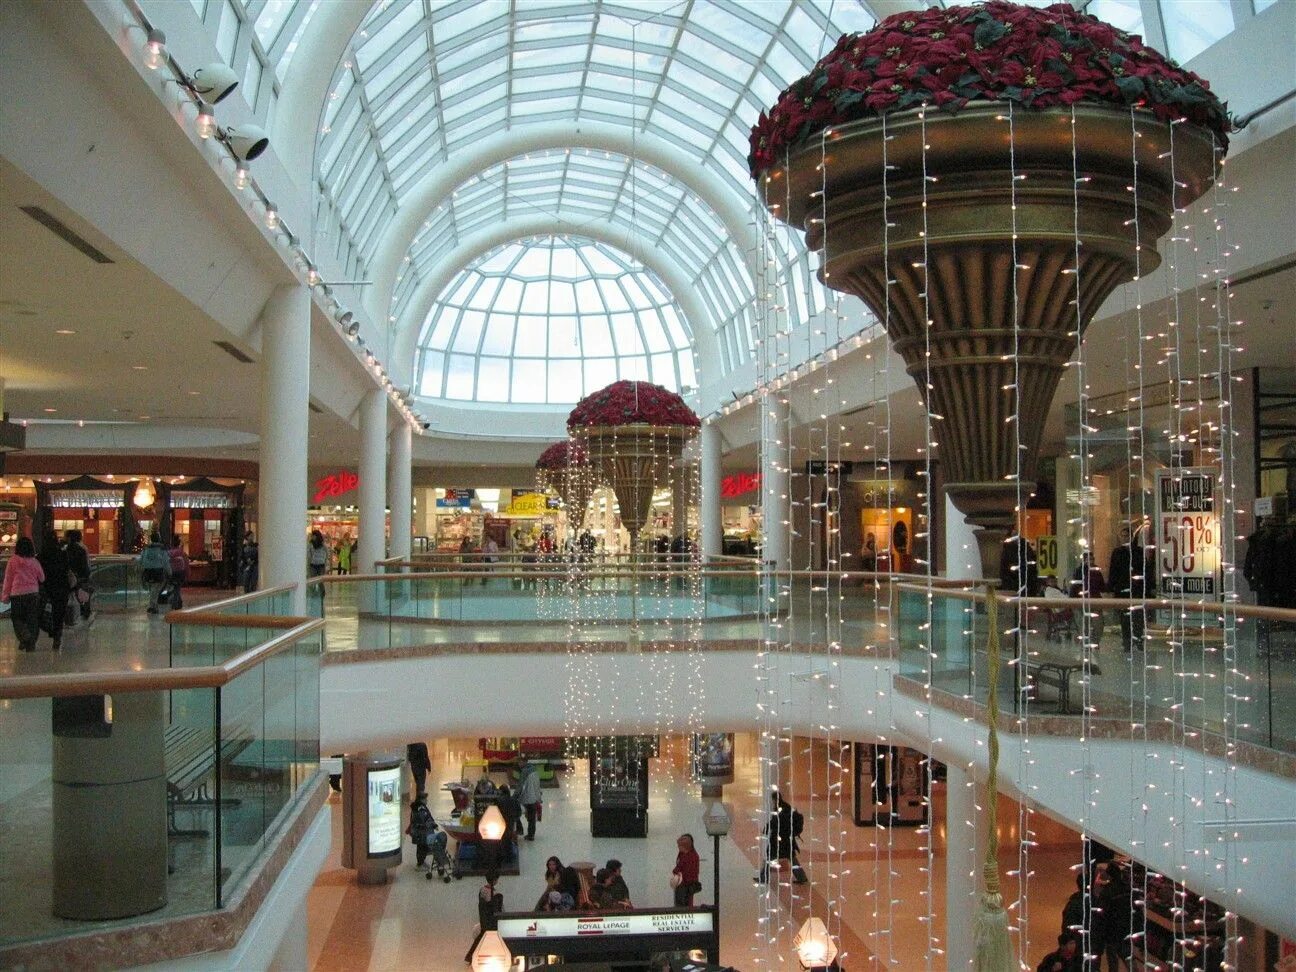 Торговый центр «Square one» в Миссиcсоге. Galleria shopping Mall Канада. Торонто Канада торговый центр. Канада торговля центр the Mall. 1 mall shopping